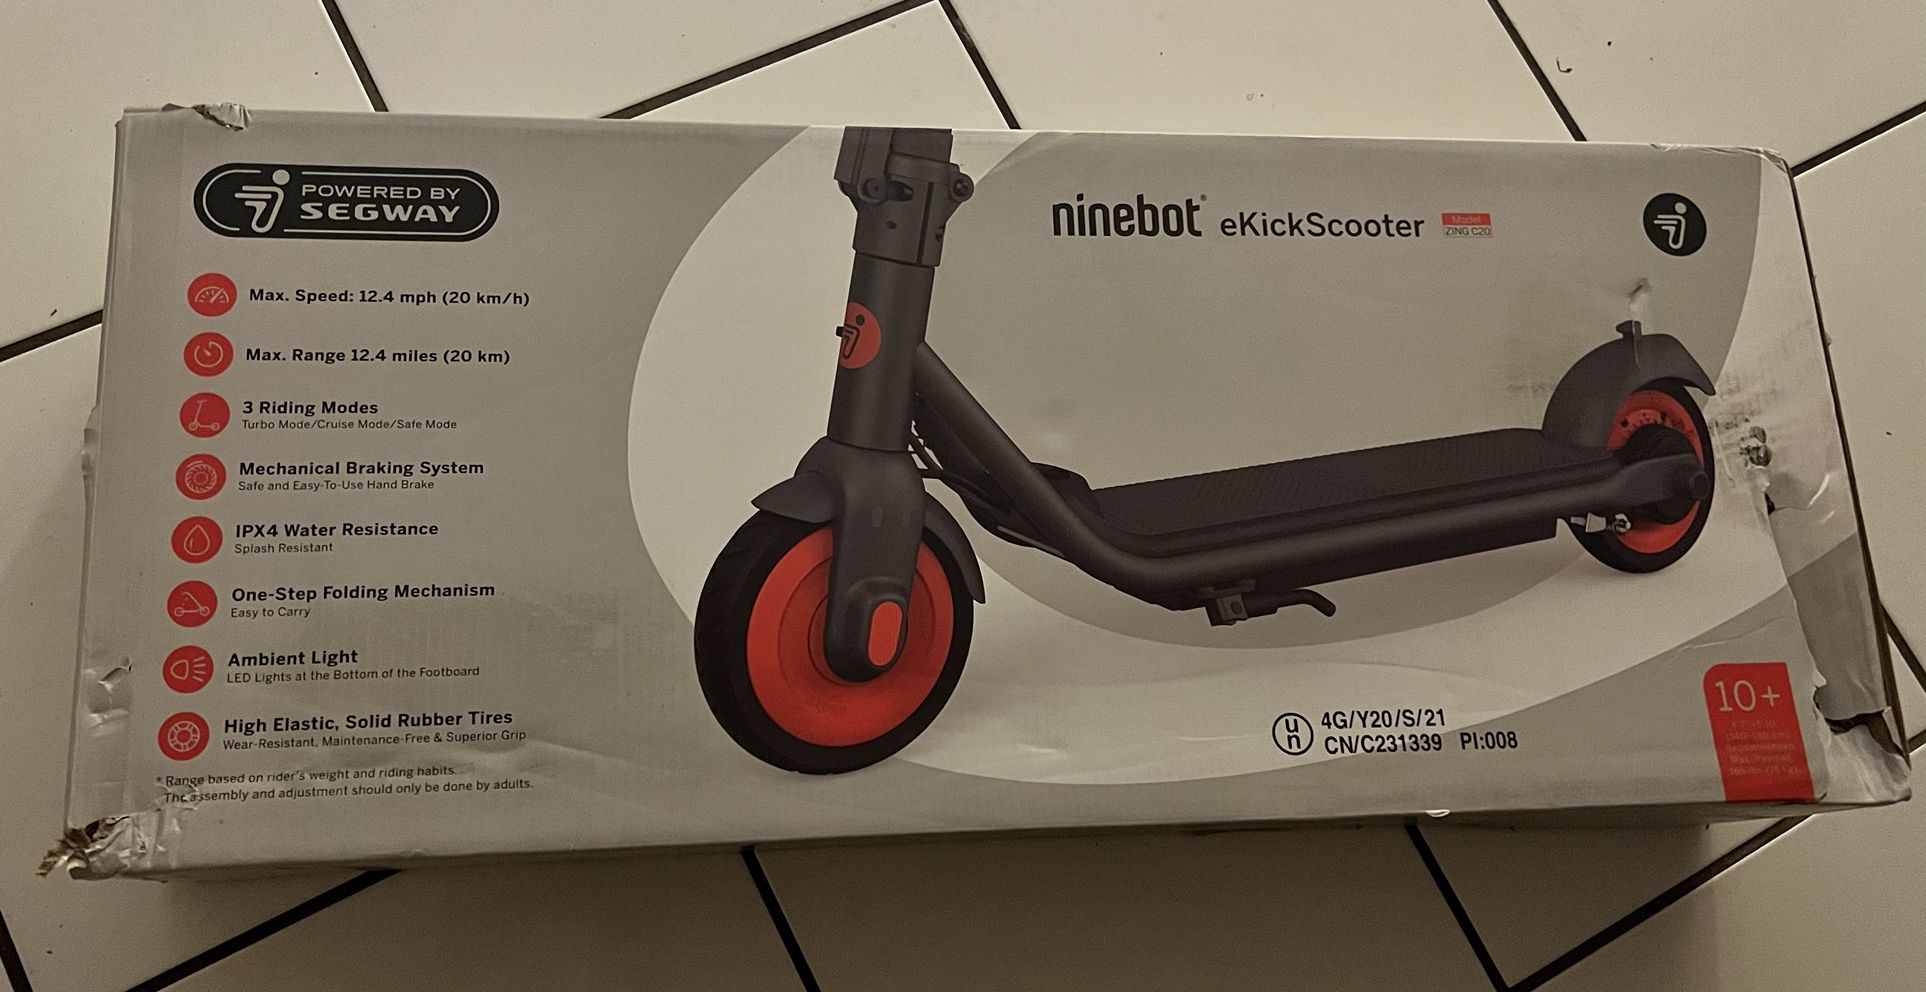 Ninebot ekick Scooter